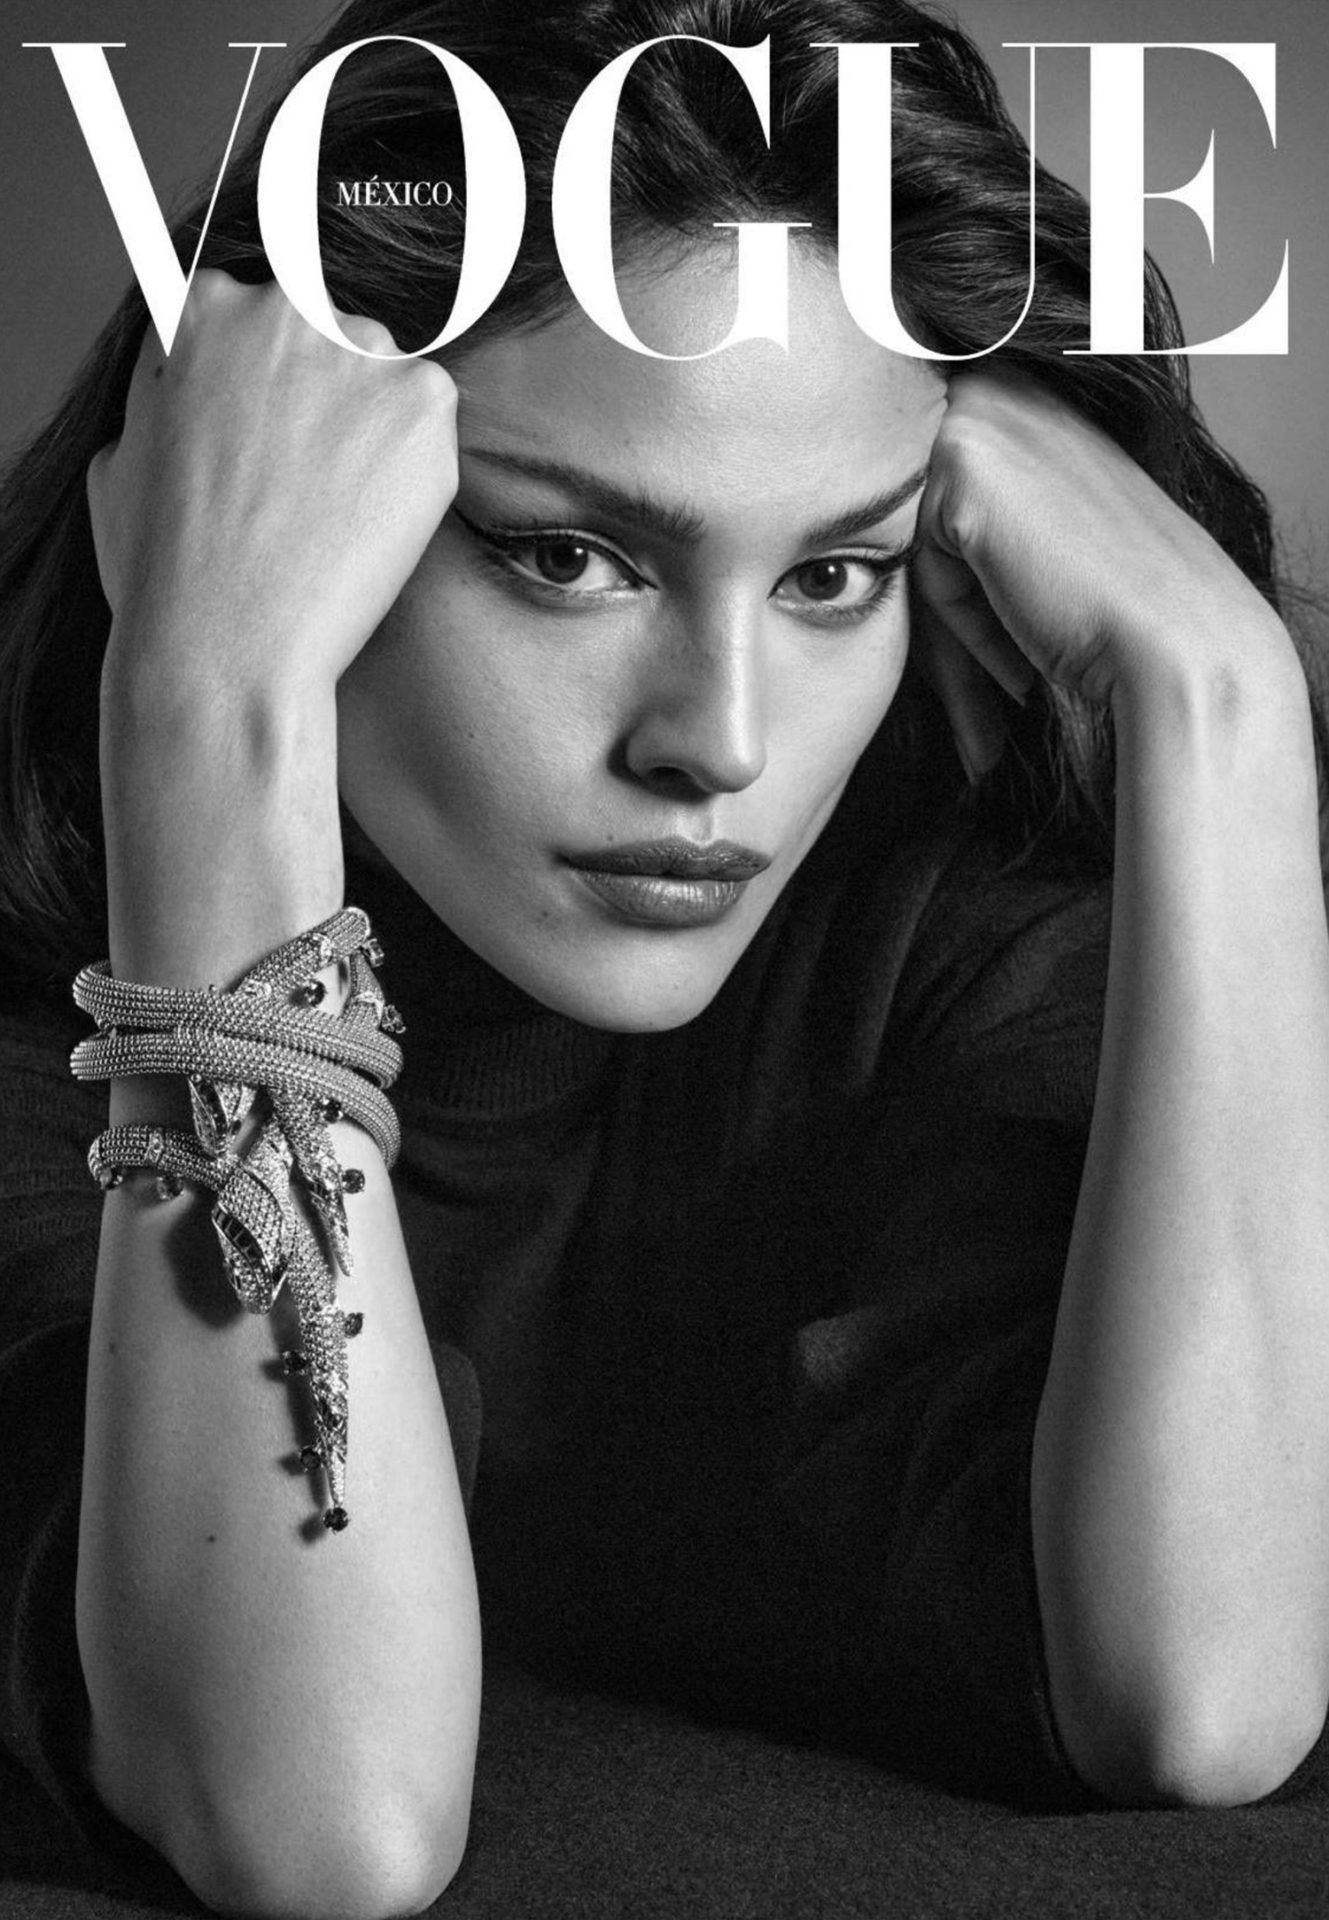 Eiza González covers Vogue Mexico & Latin America February 2022 by Alique